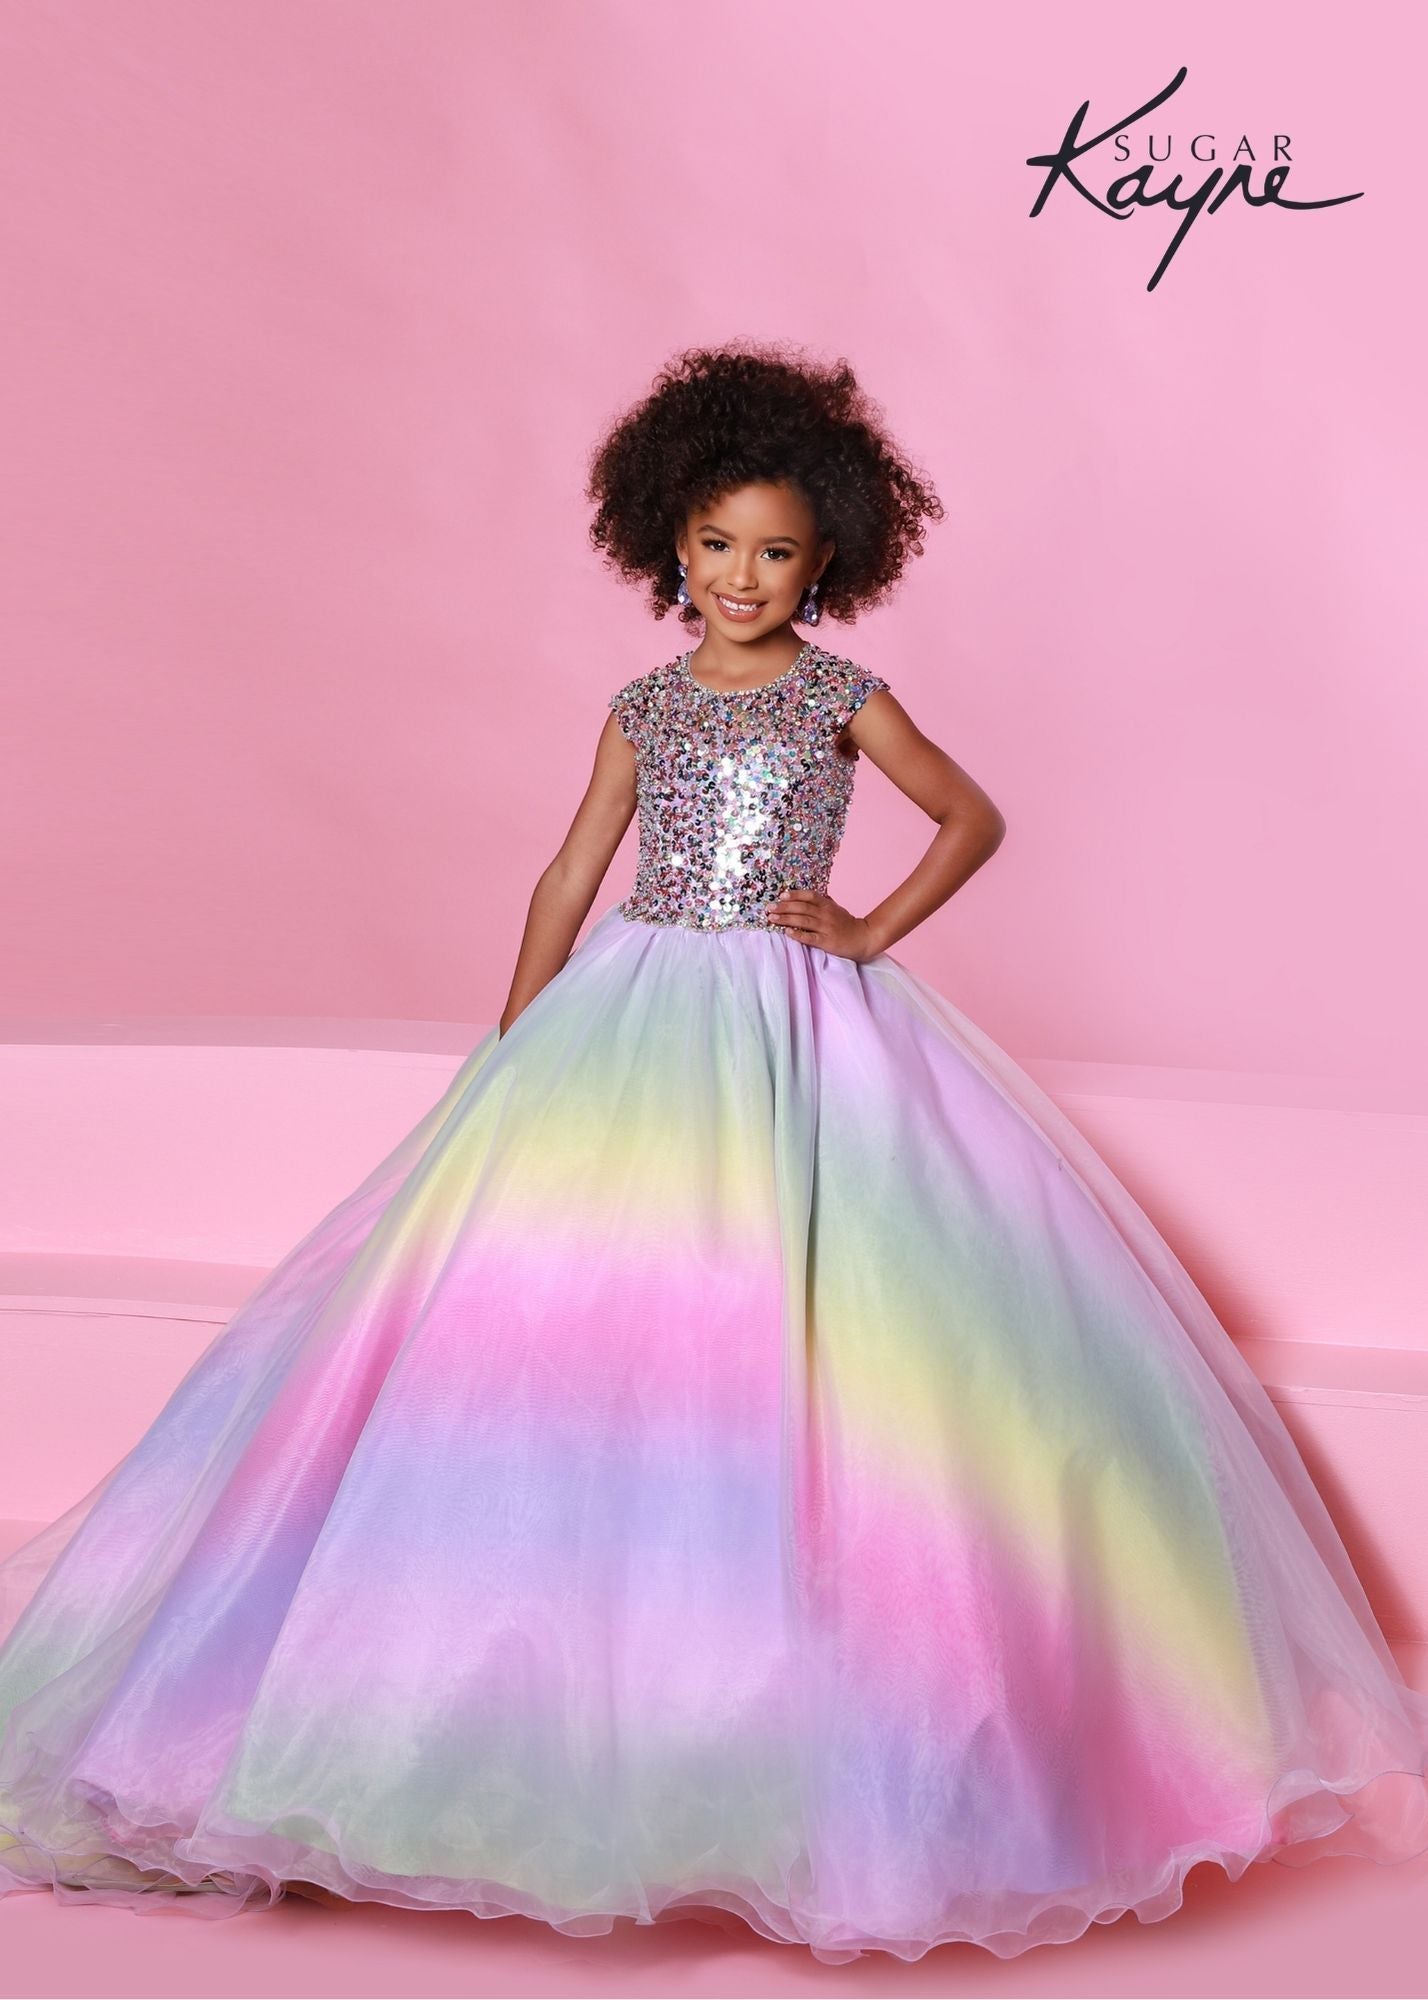 Sugar Kayne Girls' Rainbow Pageant Dress